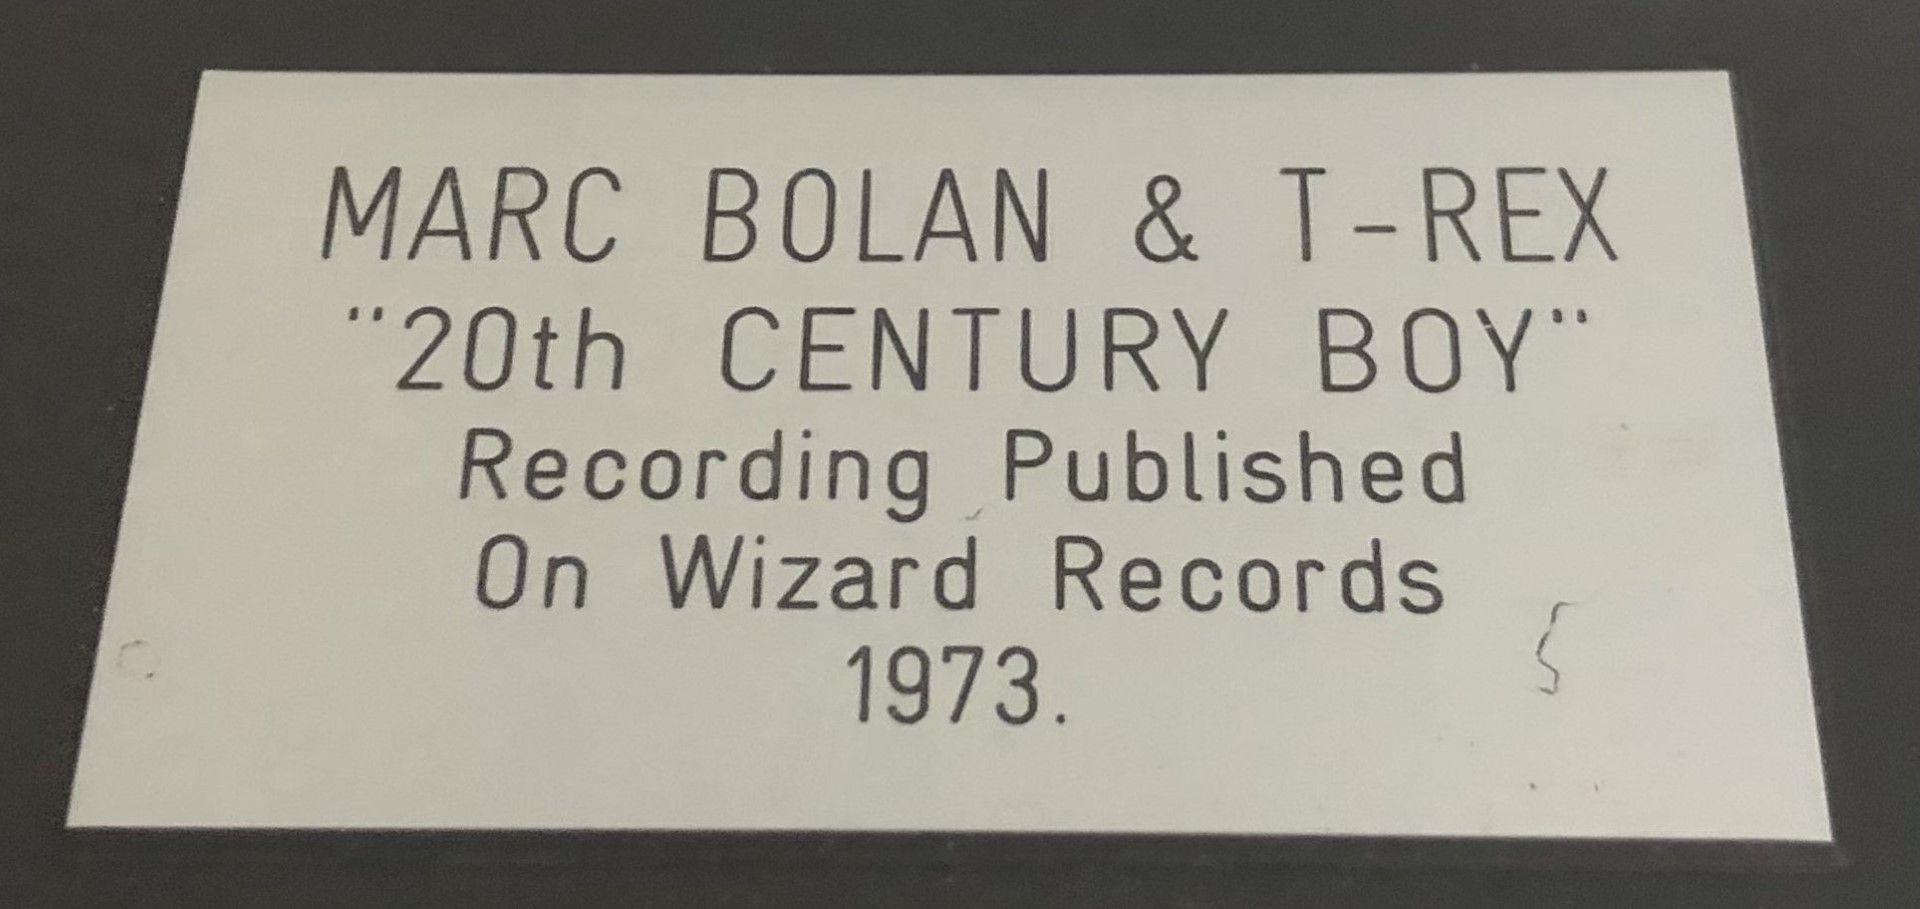 1 x Framed MARC BOLAN & T-REX Silver 7 Inch Vinyl Record - 20th CENTURY BOY - Image 2 of 4